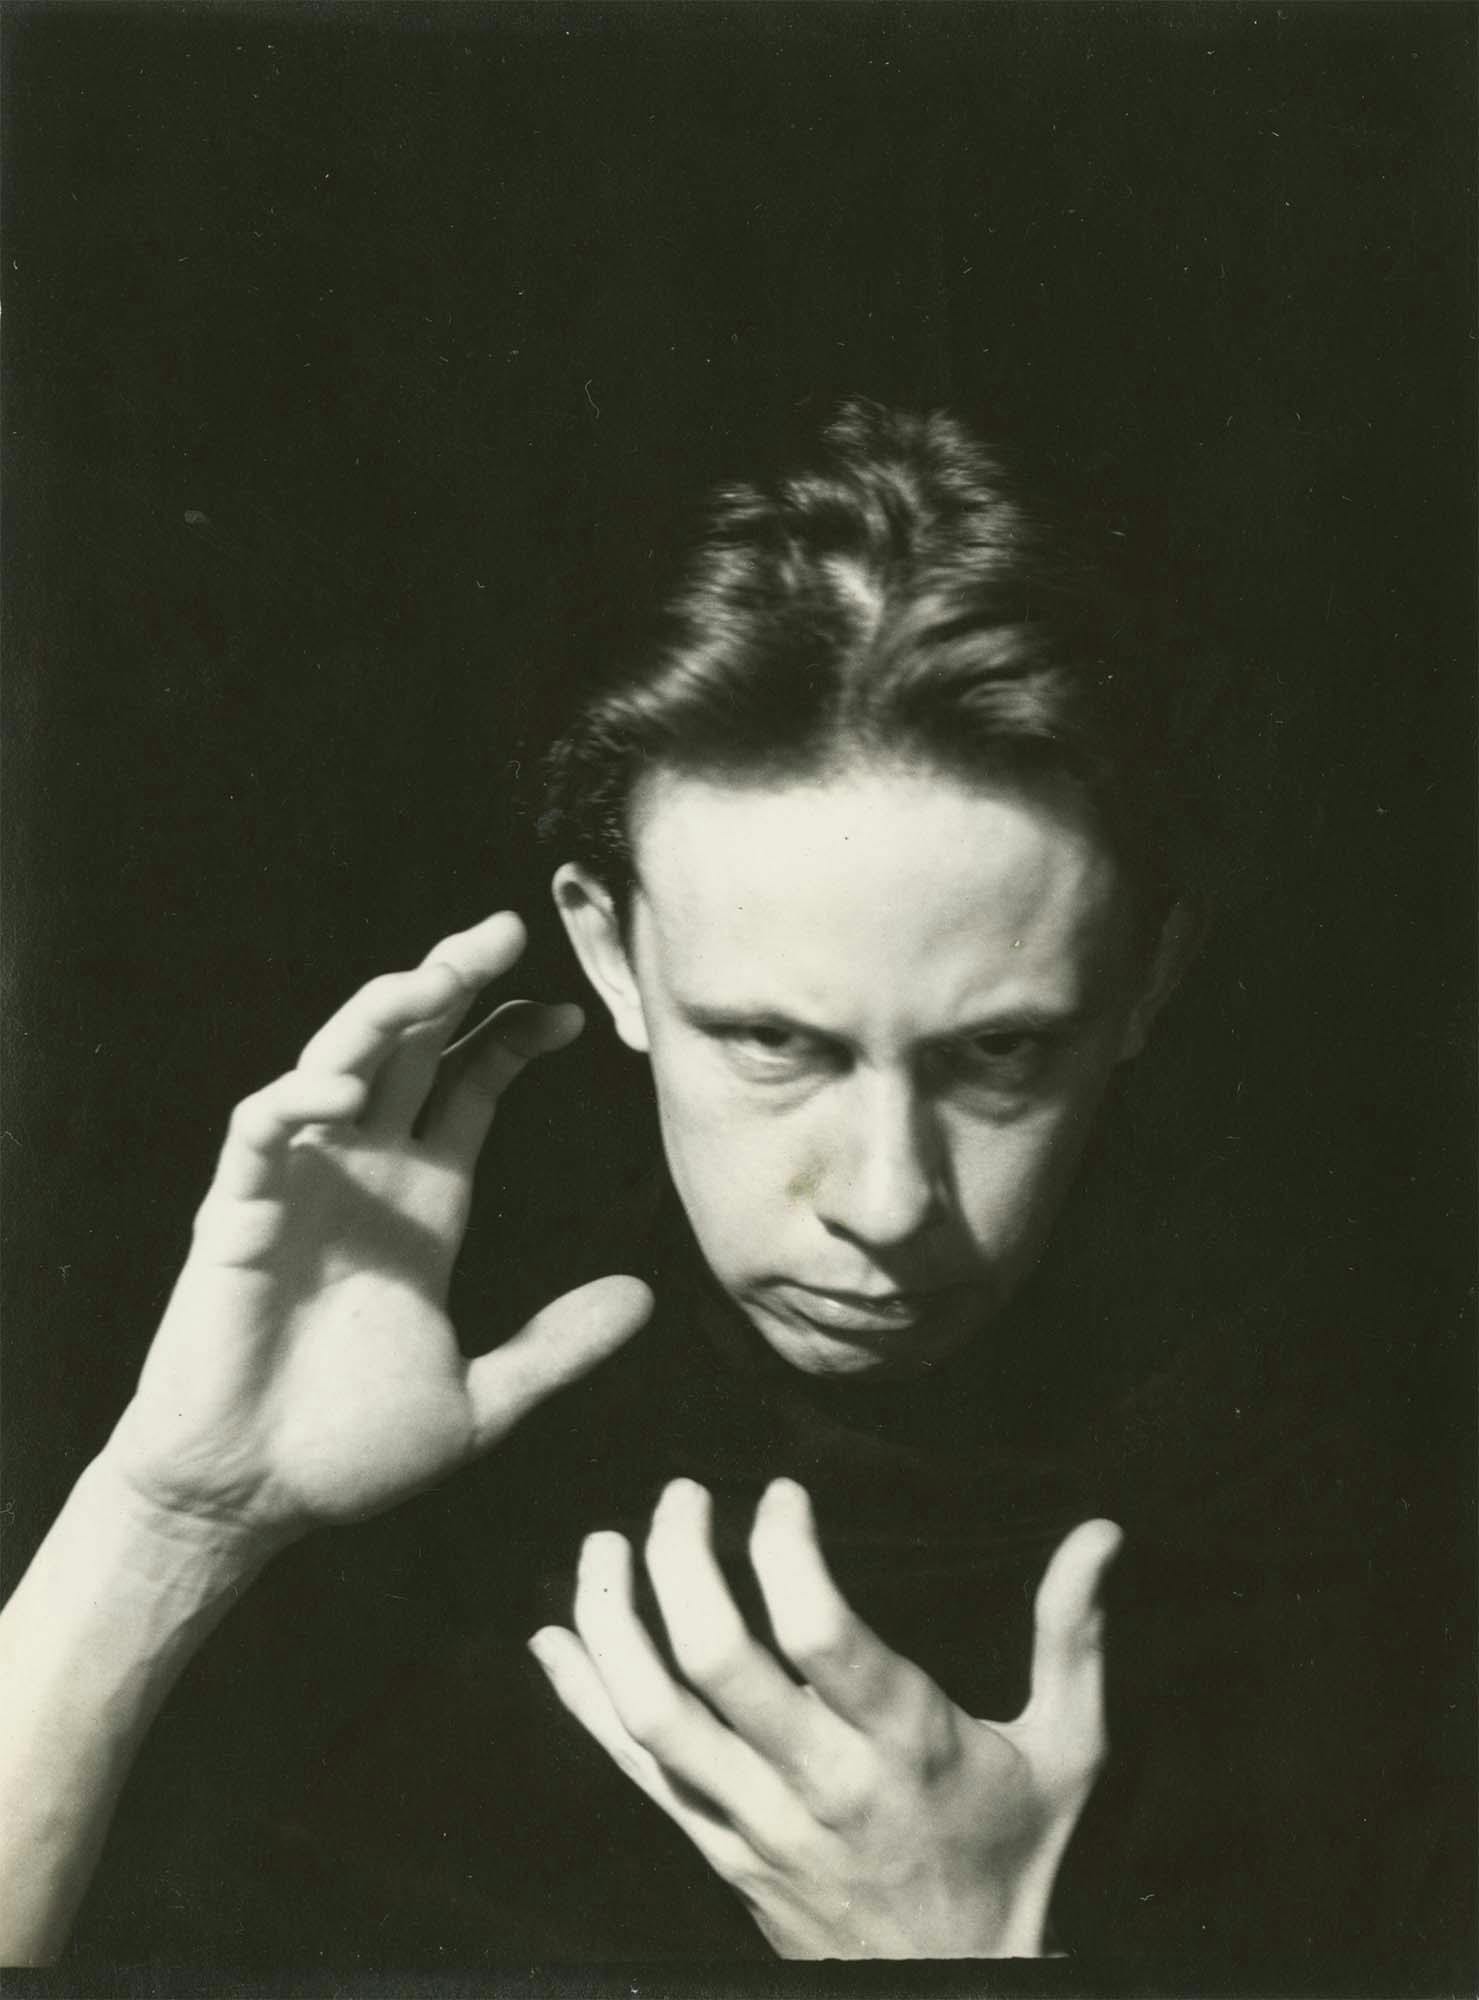 Self-Portrait
c. 1935
Gelatin silver print
4 7/8 x 3 5/8 in.
 – The Richard Pousette-Dart Foundation